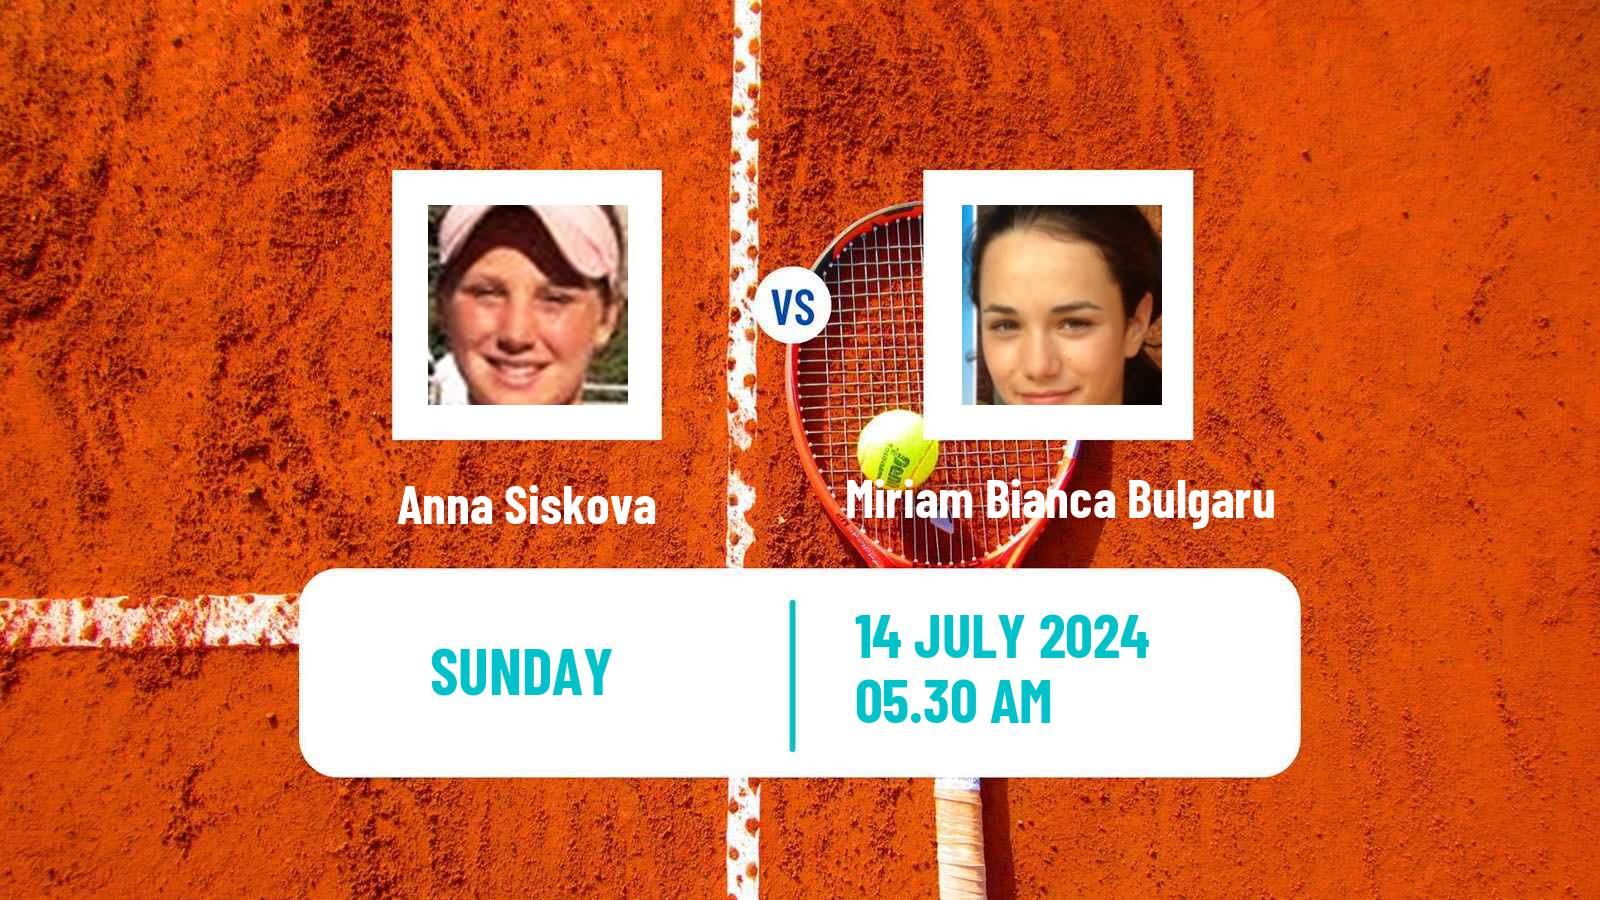 Tennis WTA Budapest Anna Siskova - Miriam Bianca Bulgaru